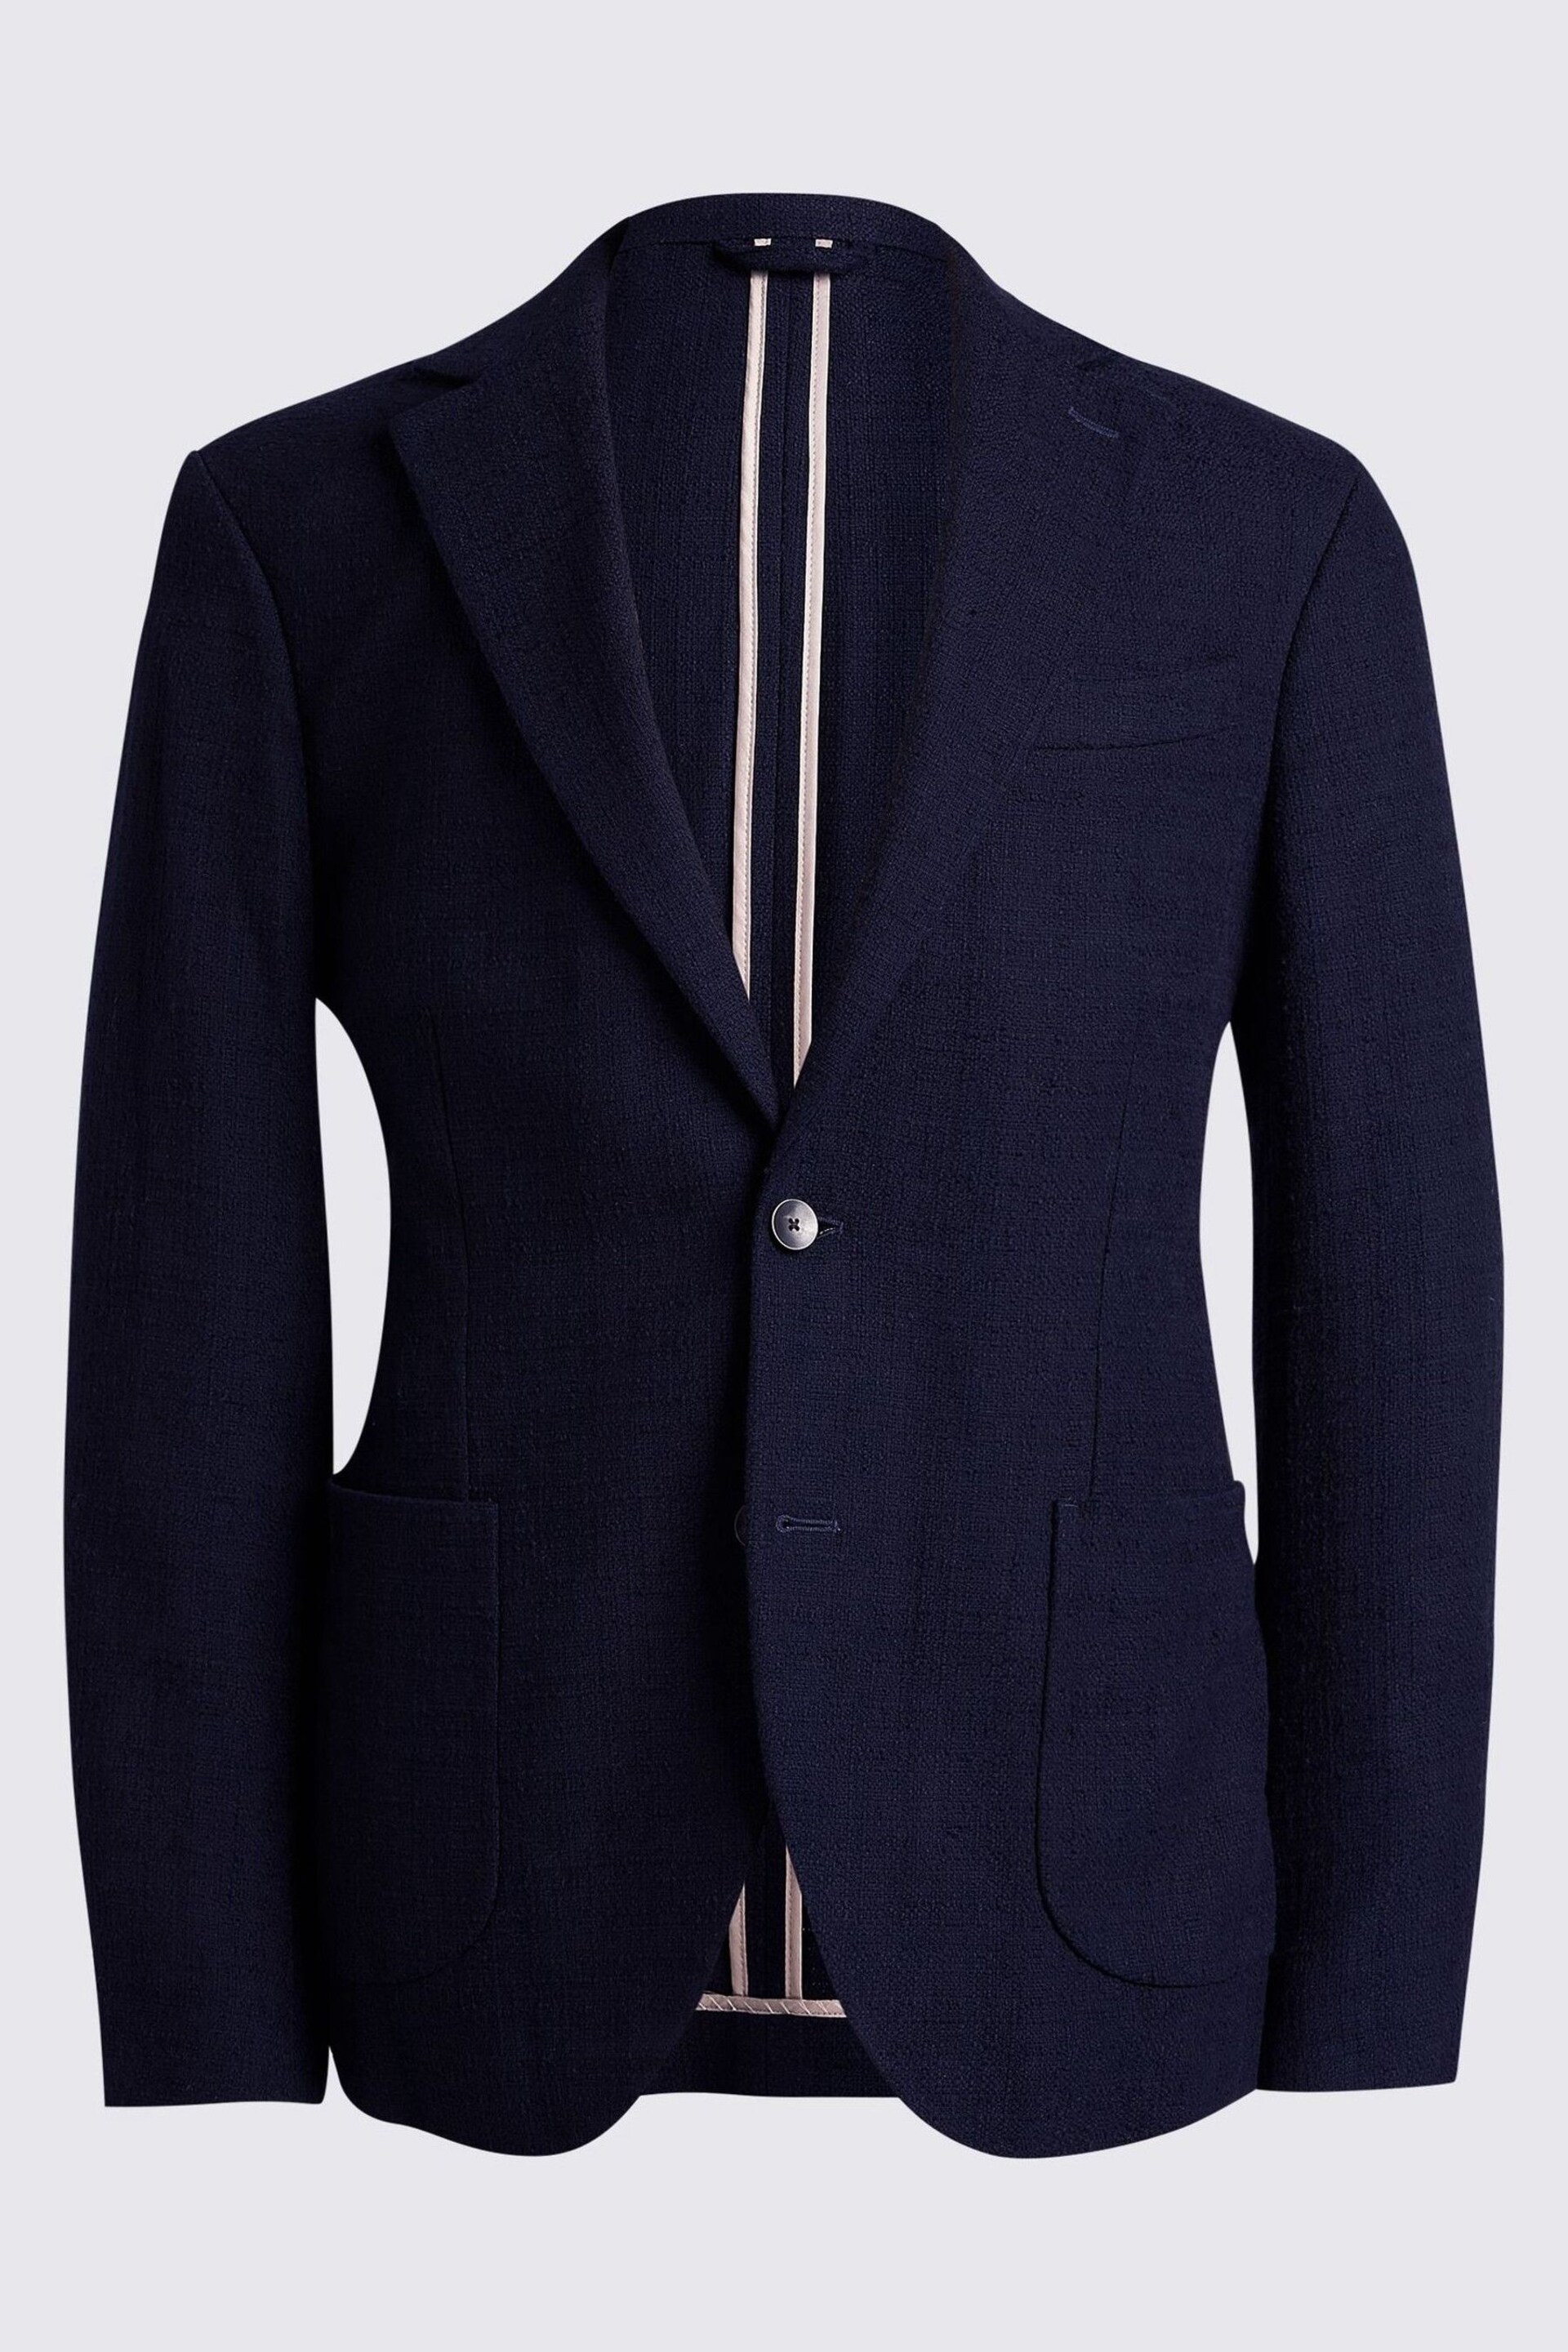 MOSS Blue Hoxton Jacket - Image 5 of 5